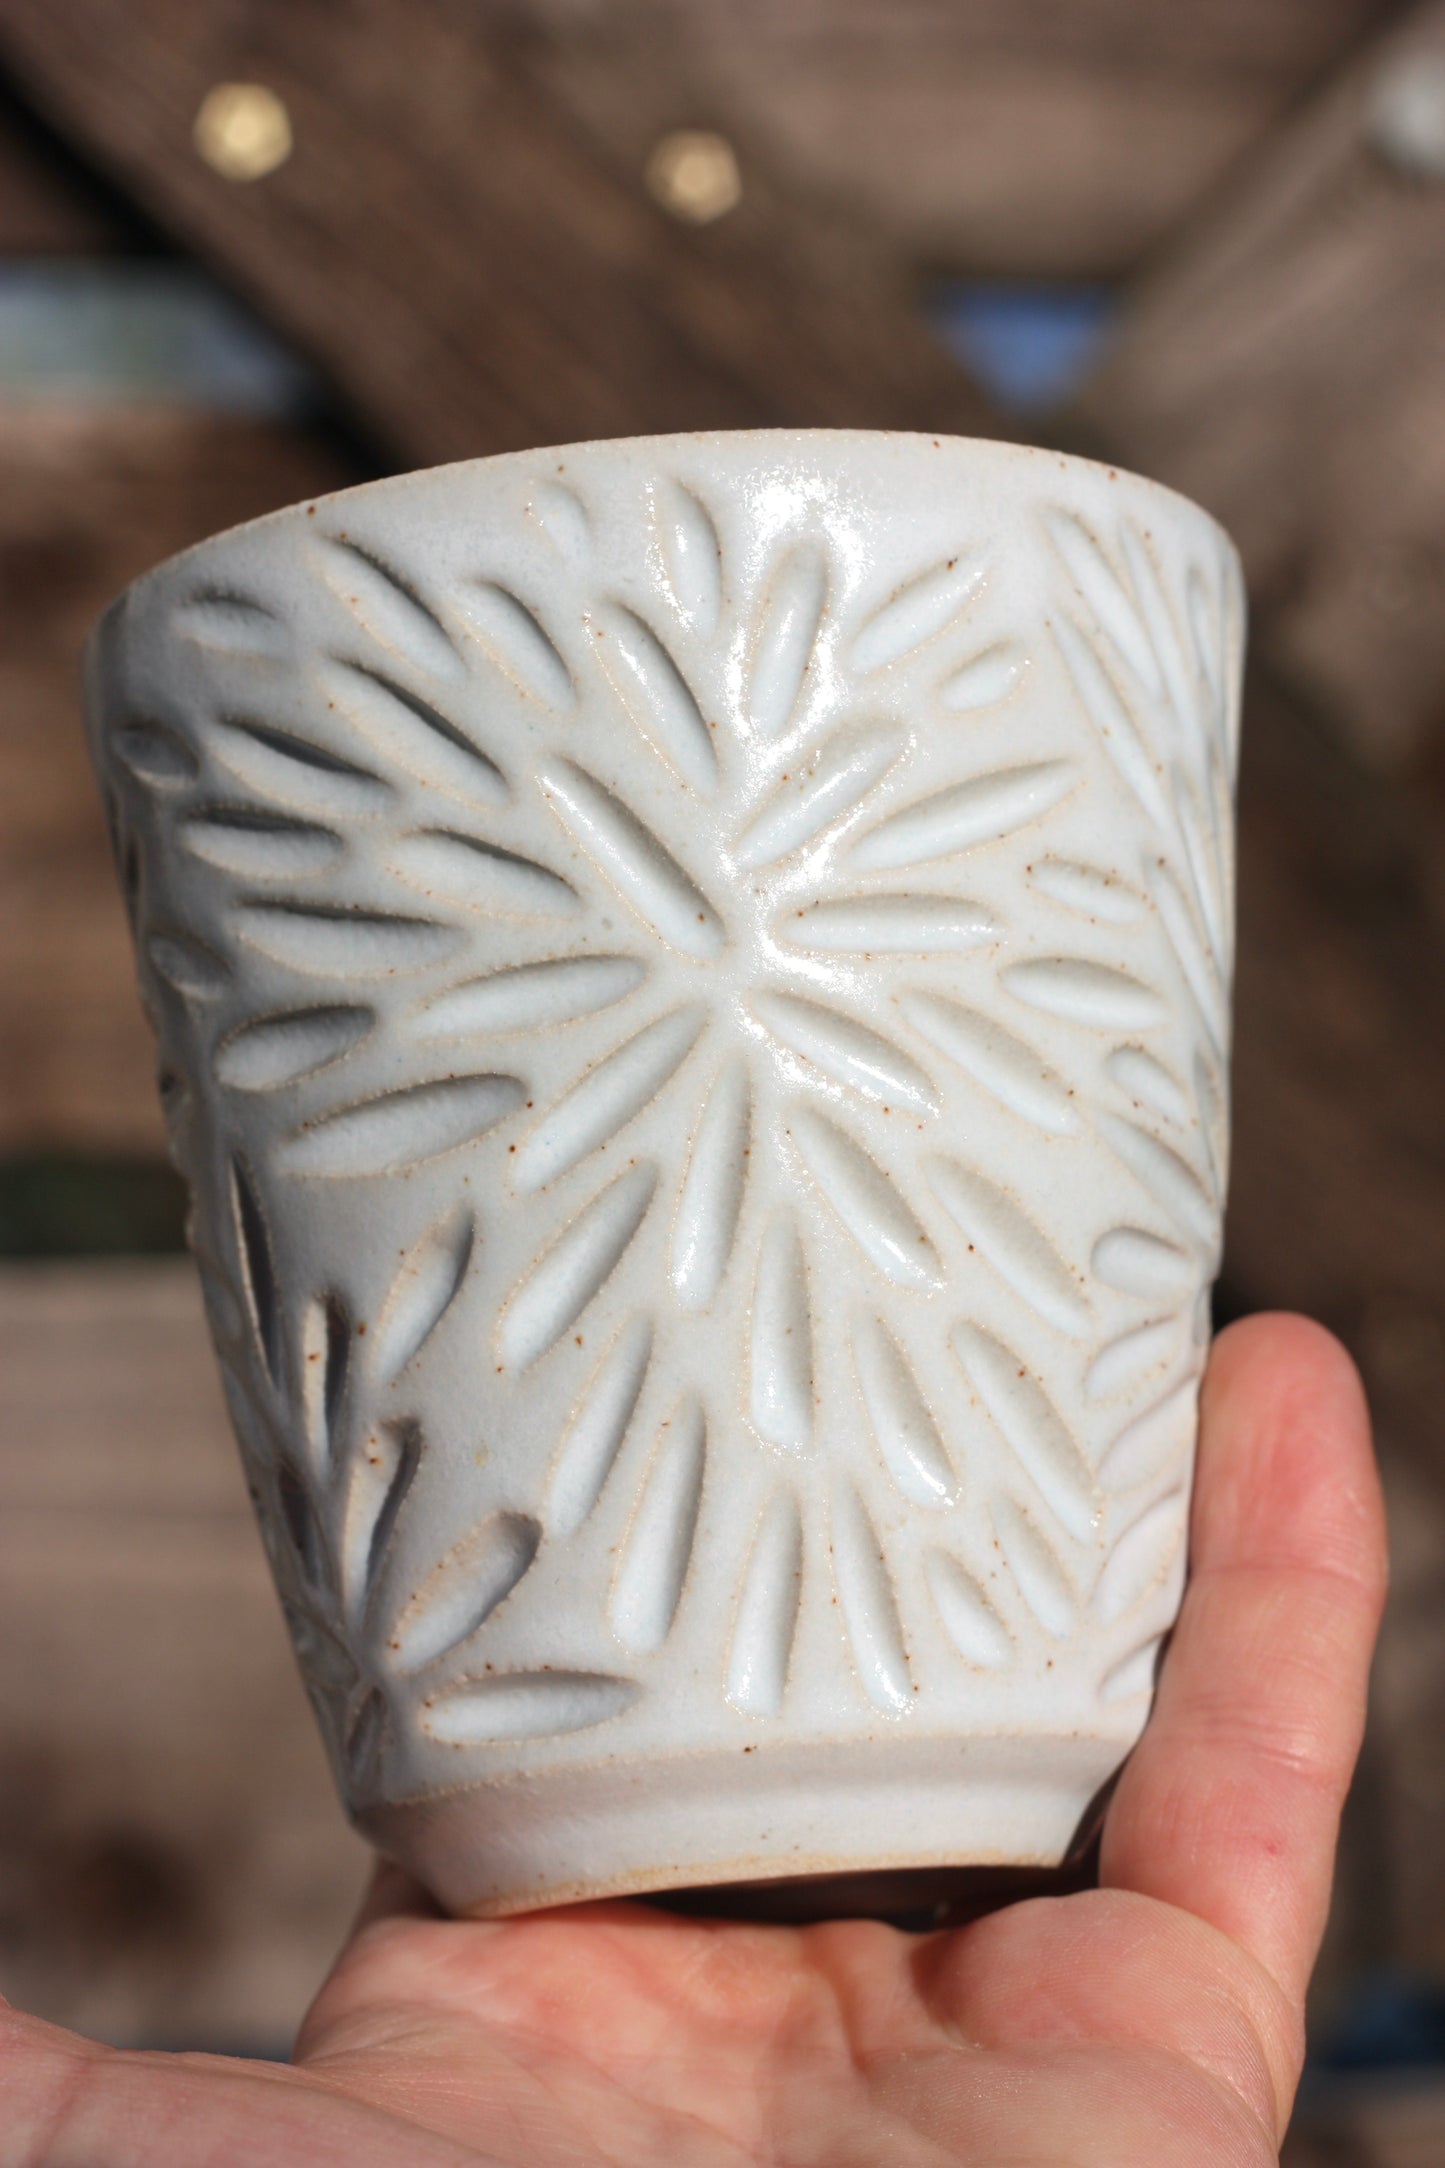 350ml 12 oz Carved Pottery Latte Cup Handle free Mug handmade stacking ceramic cup beaker tumbler